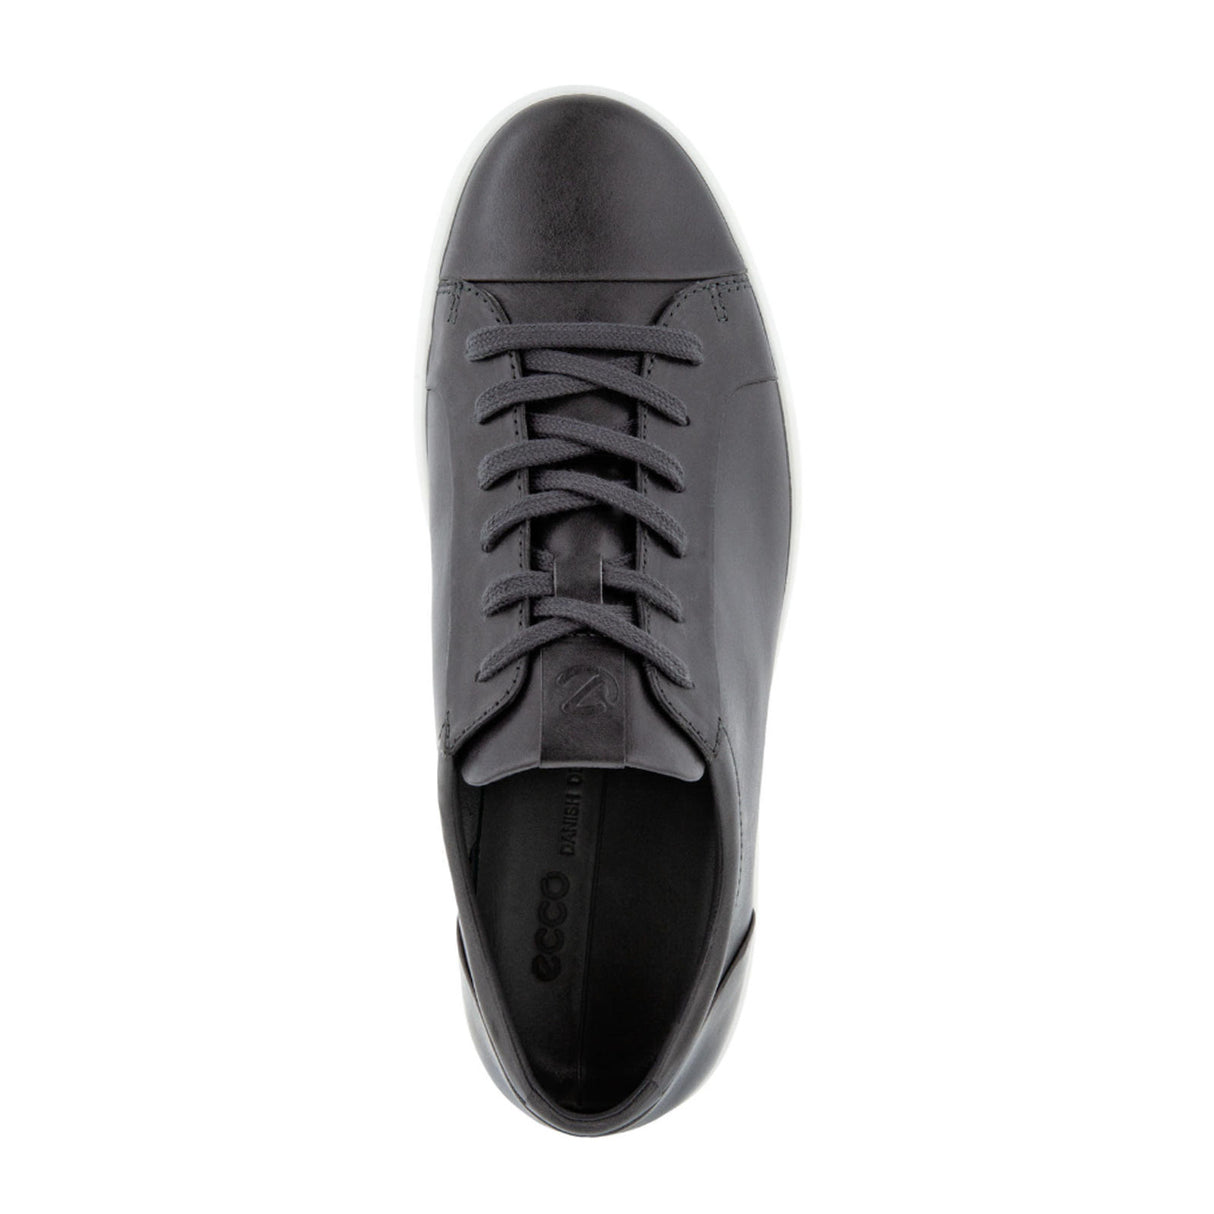 ECCO Soft 7 City Sneaker (Men) - Titanium Dress-Casual - Sneakers - The Heel Shoe Fitters